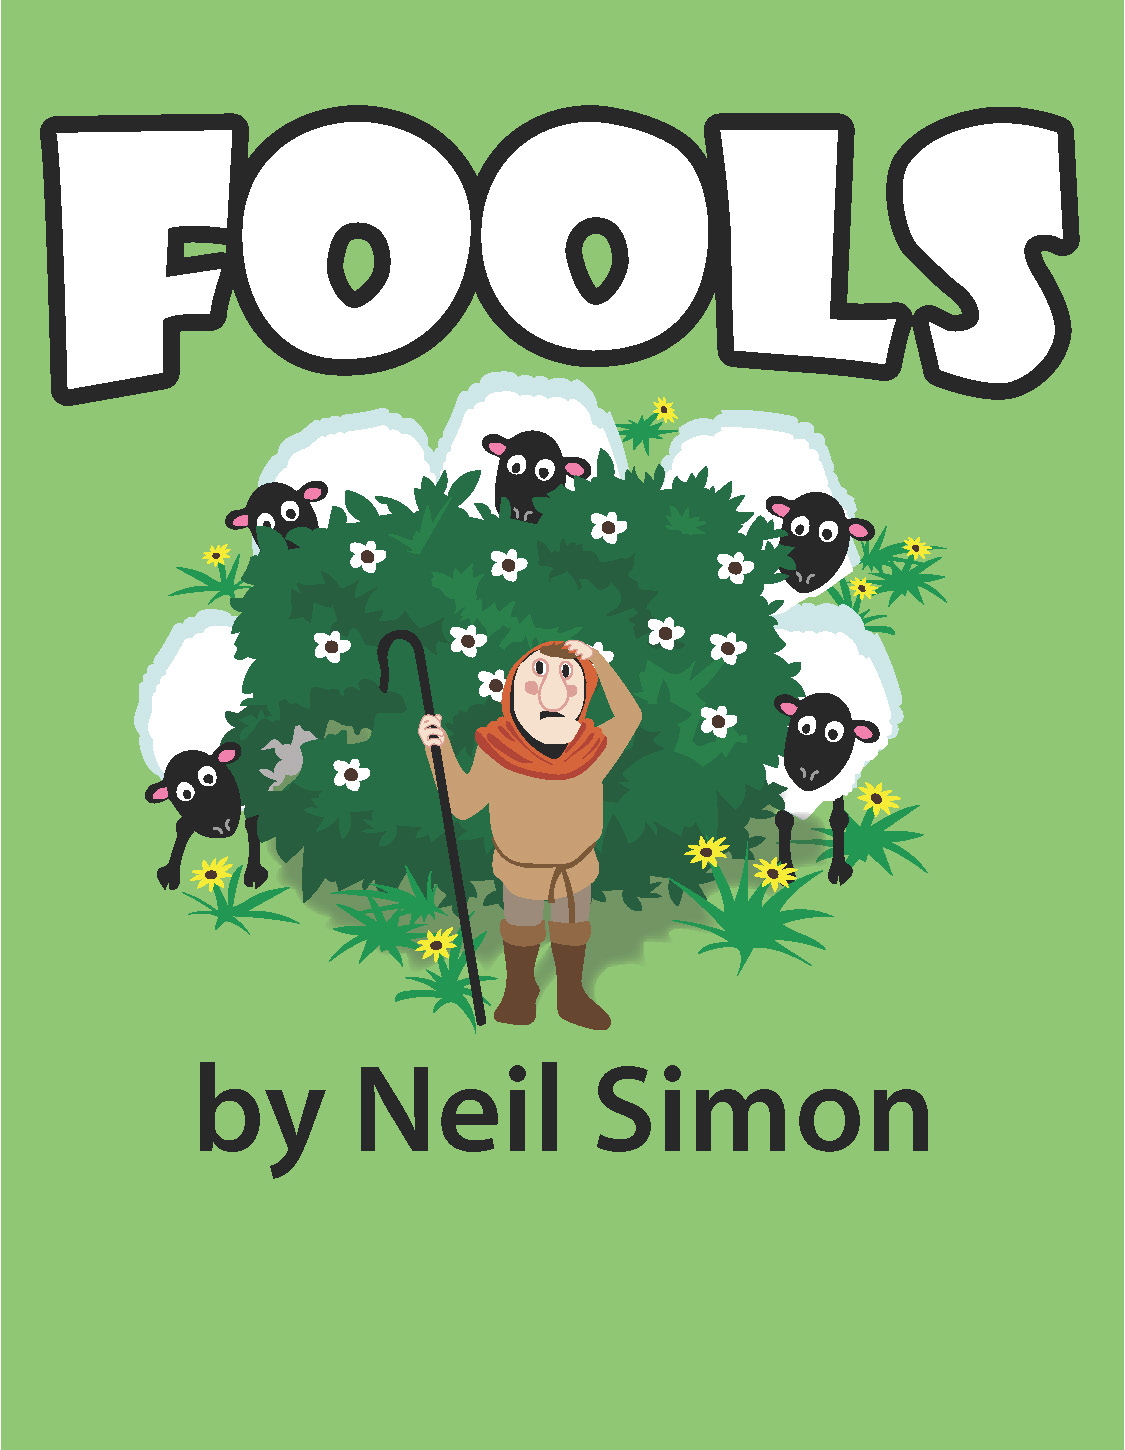 Neil Simon’s comic fable, Fools, at Pentacle Theatre